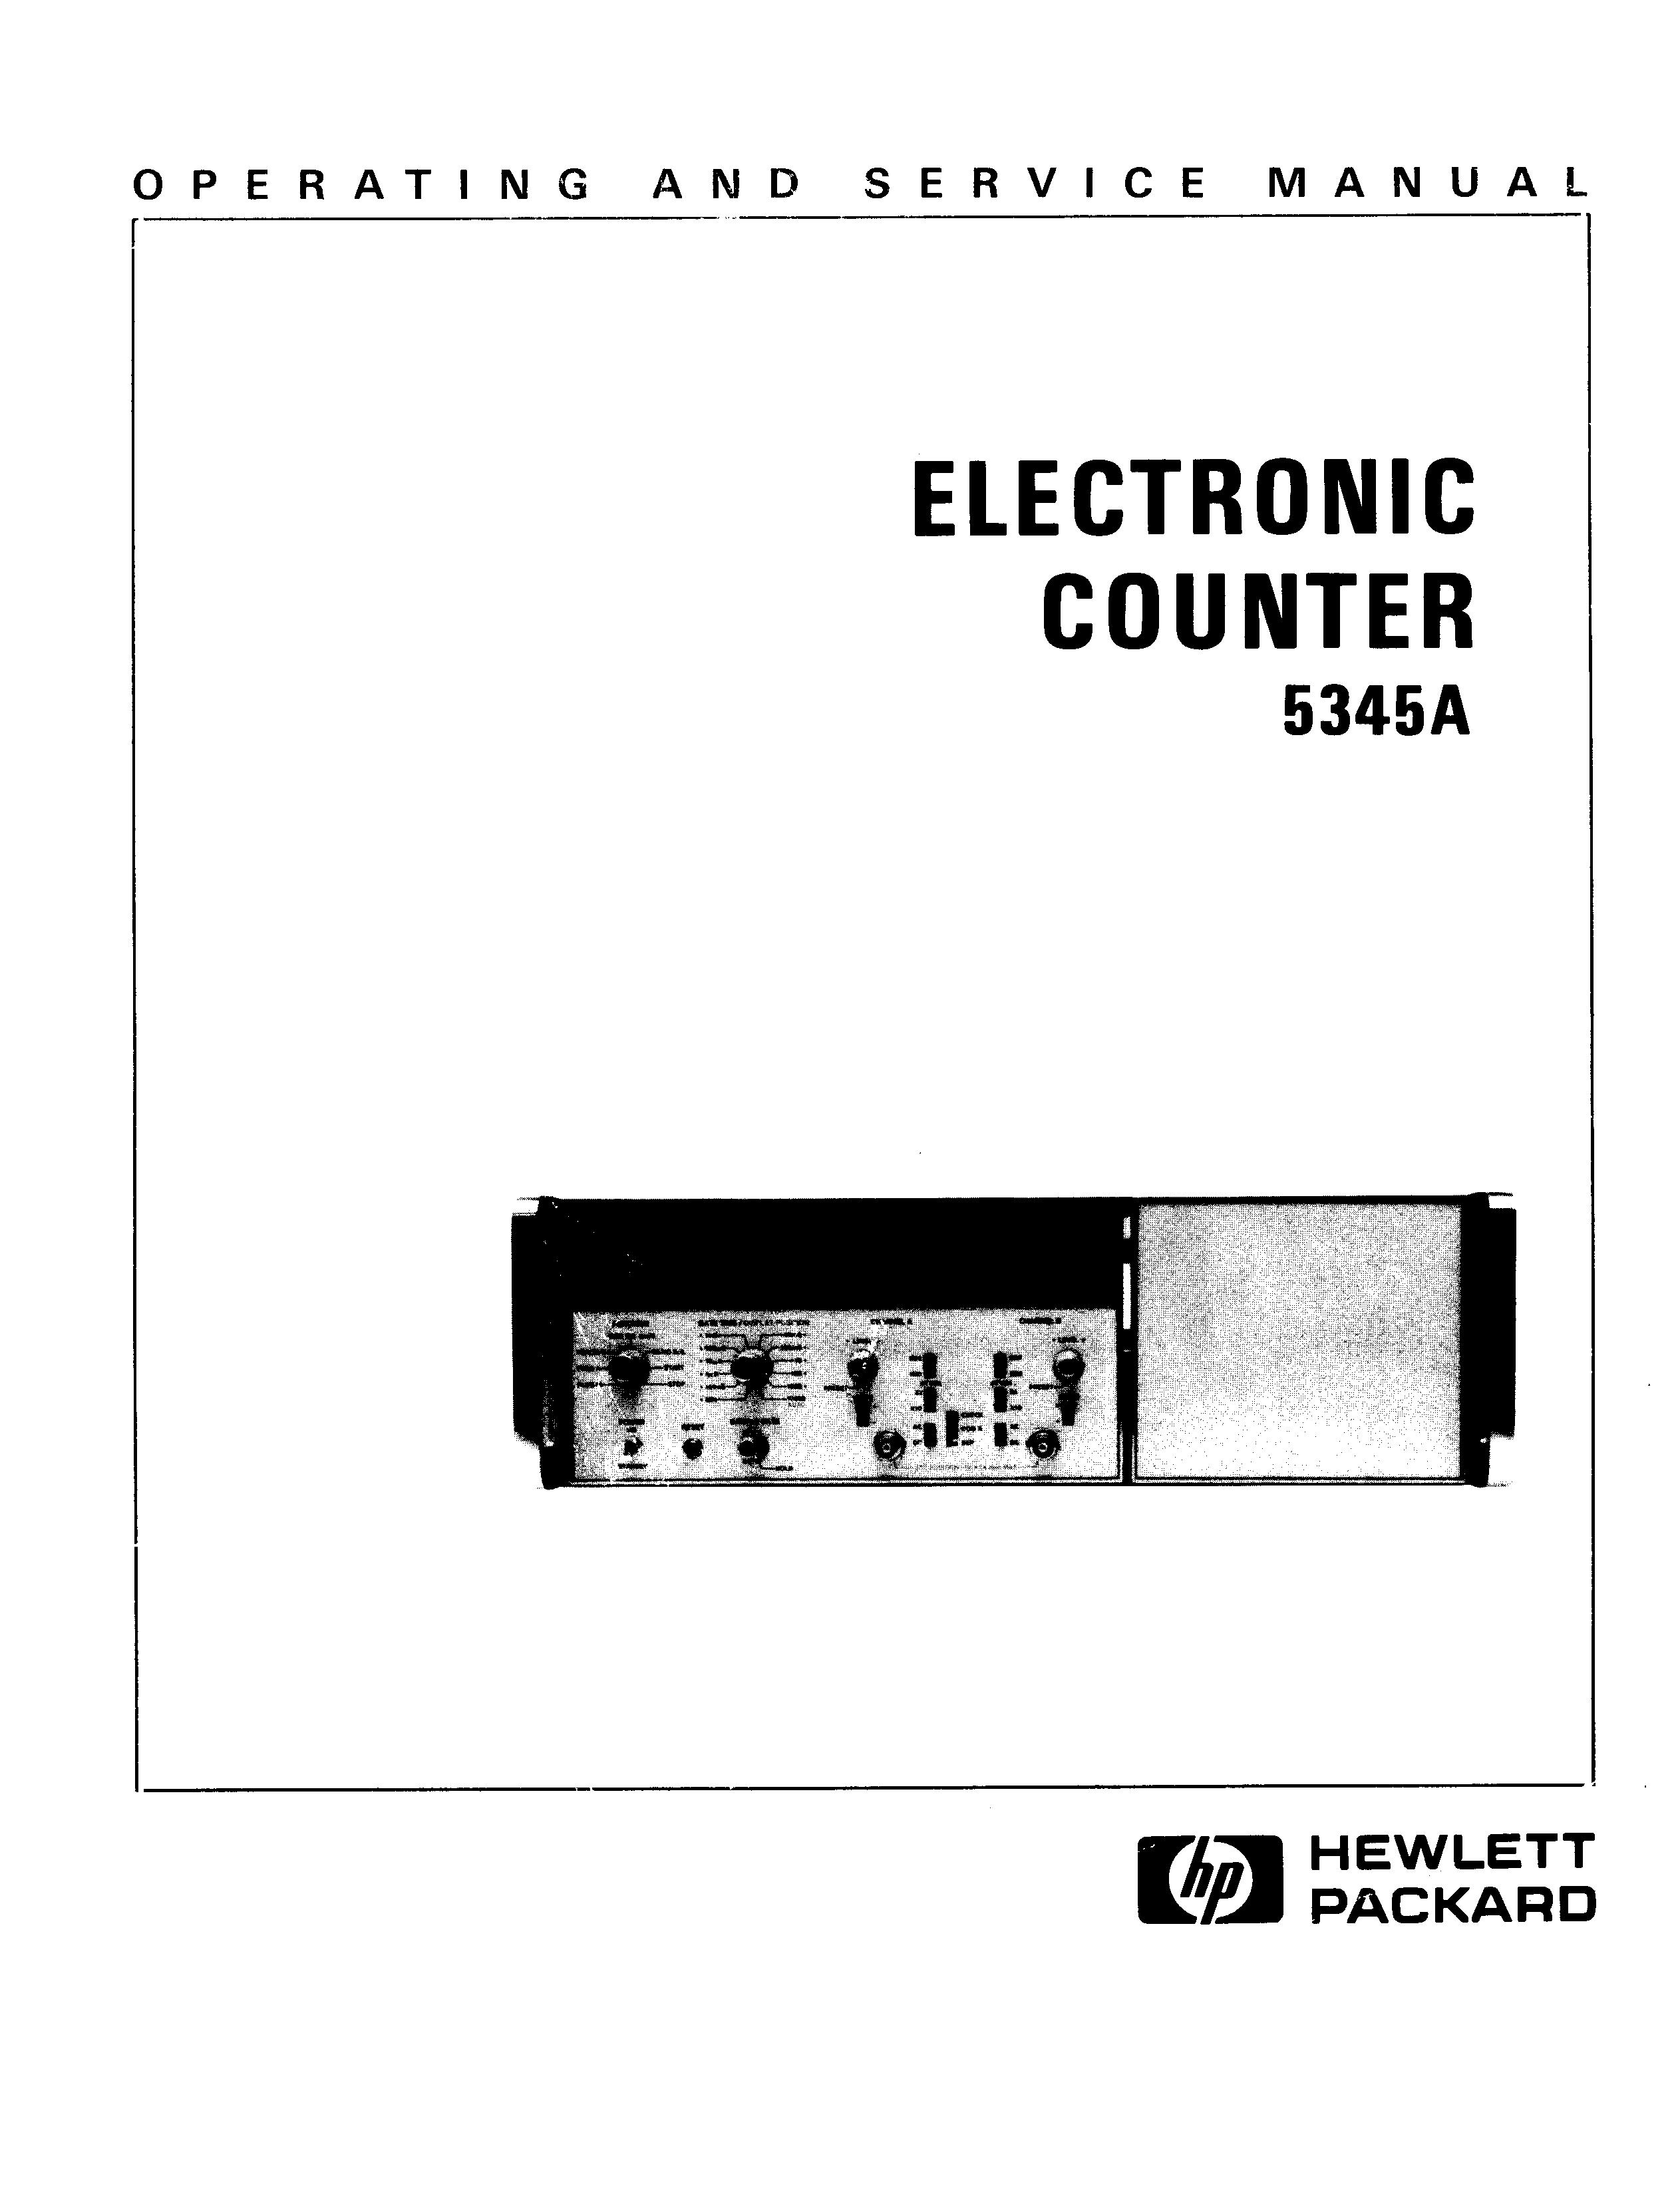 HP (Hewlett-Packard) 5345A Clock Radio User Manual